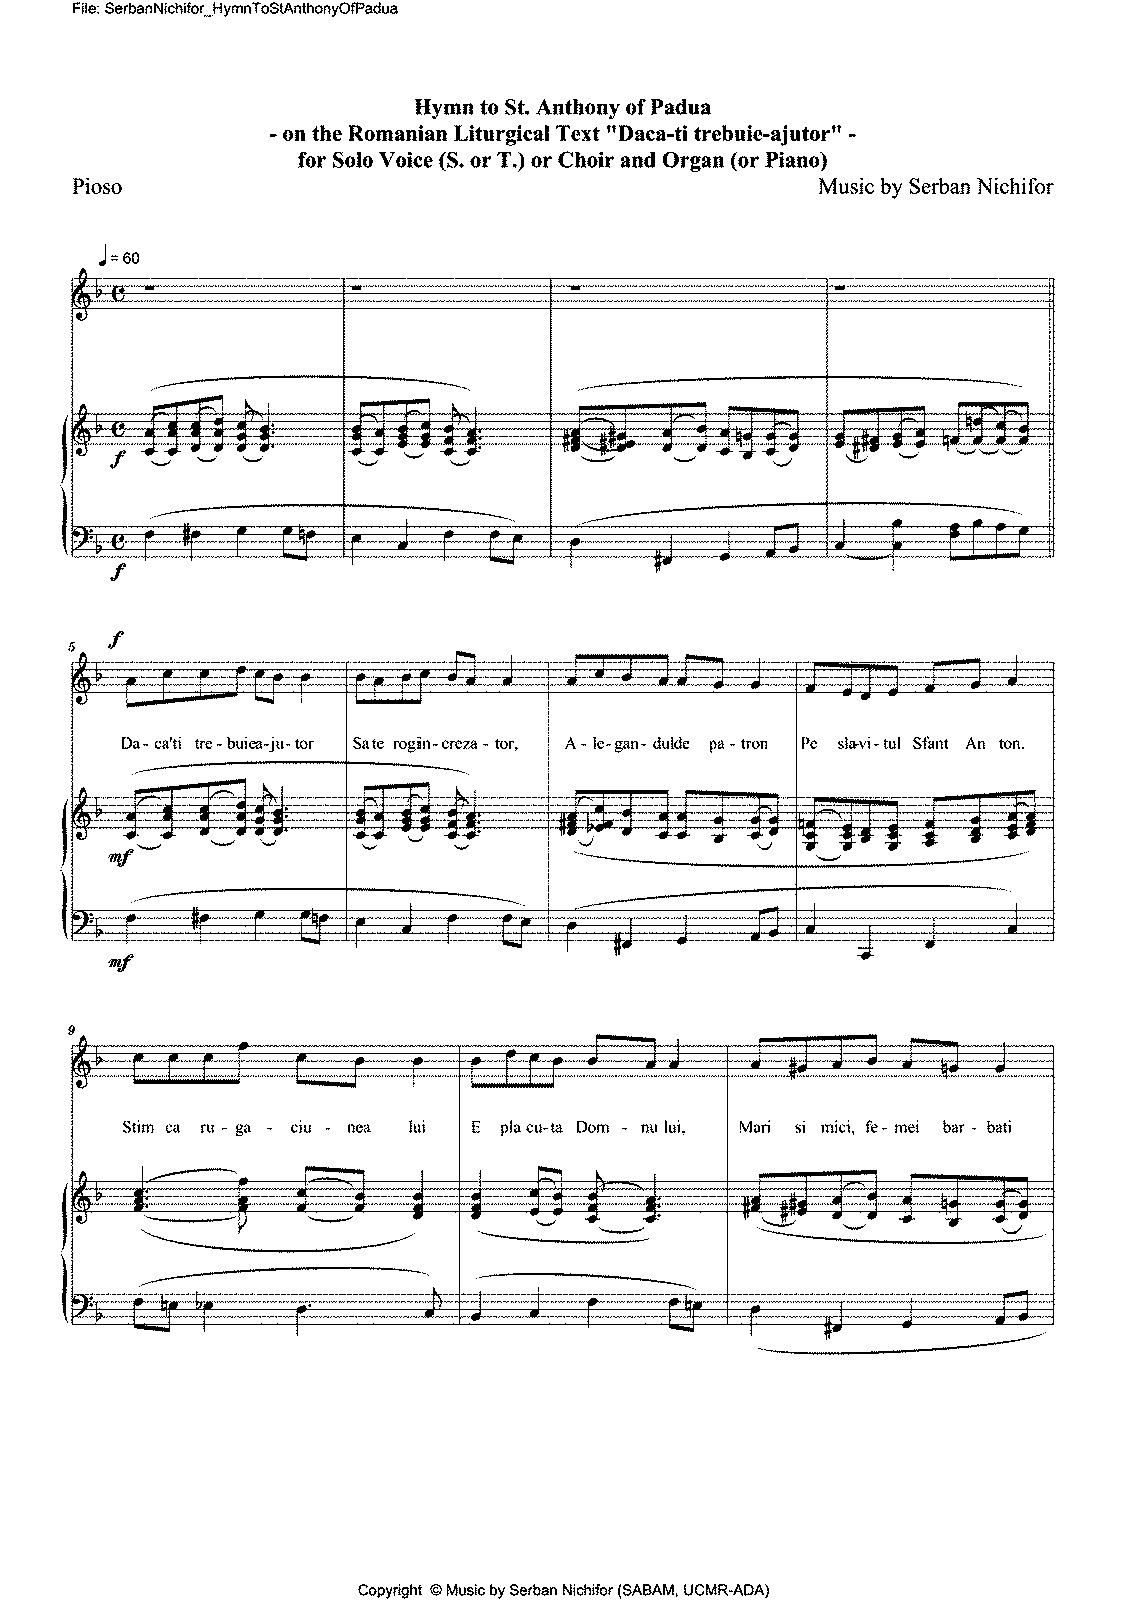 Hymn to St. Anthony of Padua (Nichifor, Serban) - IMSLP